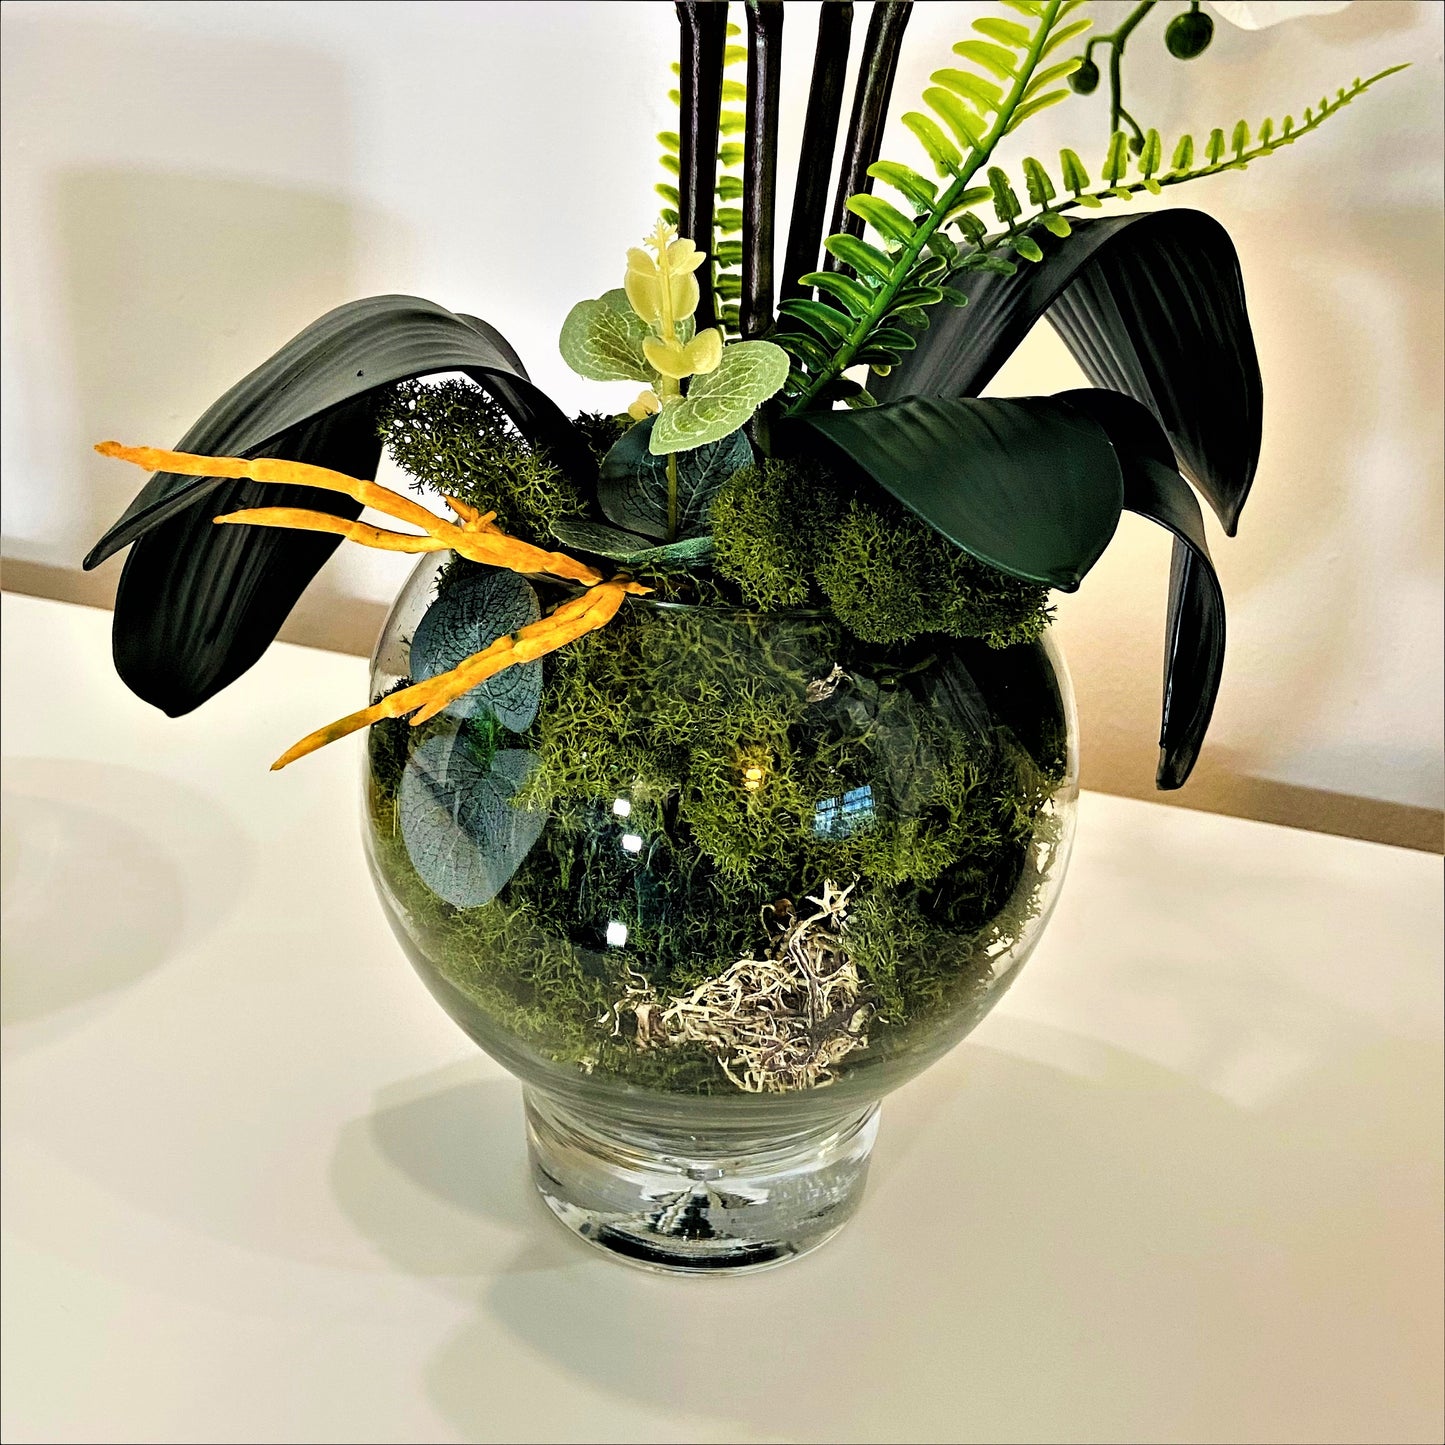 BANANA MOON PARIS - Yellow orchid flower arrangement in a Round Glass Pillar Tealight Holder - Clear glass cylinder - Unique Botanic